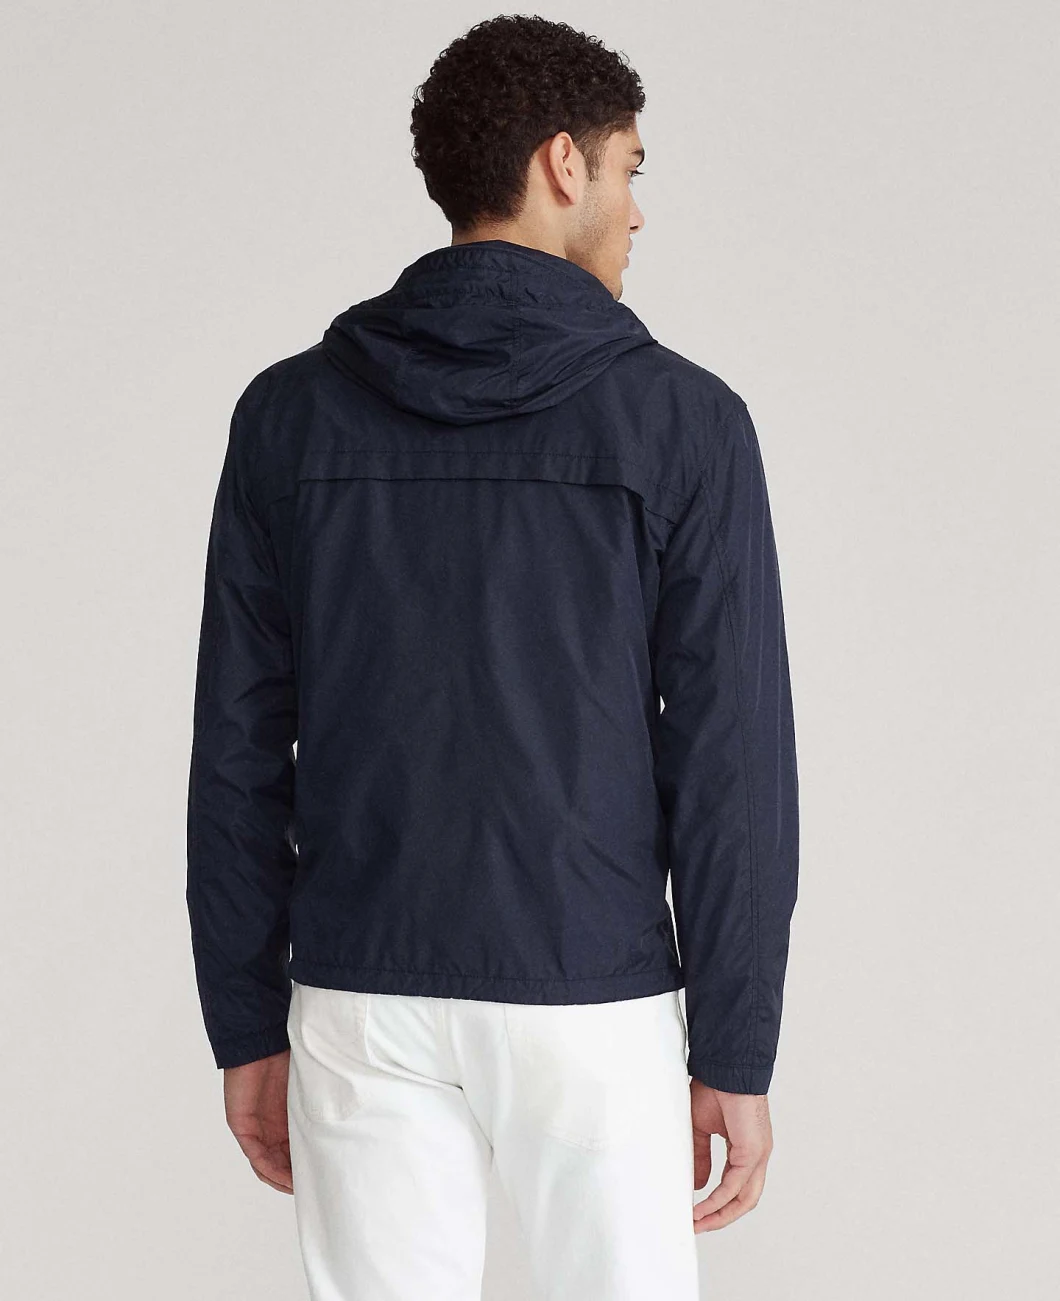 Reversible Jackets for Men Mens Jackets Coats 2021 Mens Clothing Hoody Jean Jacket